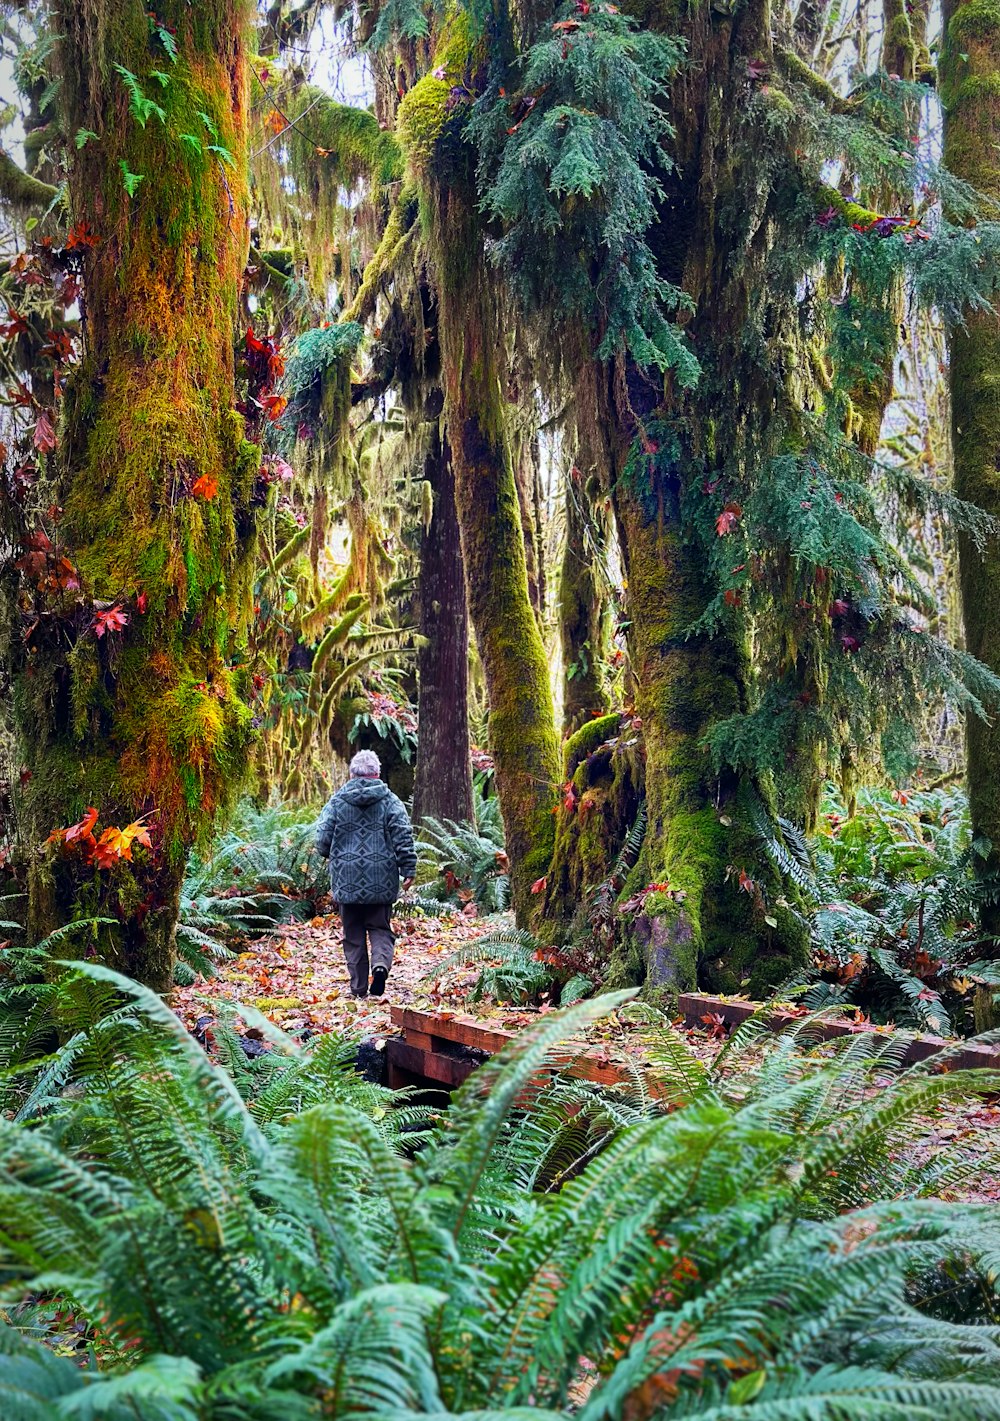 a person walking through a lush green forest